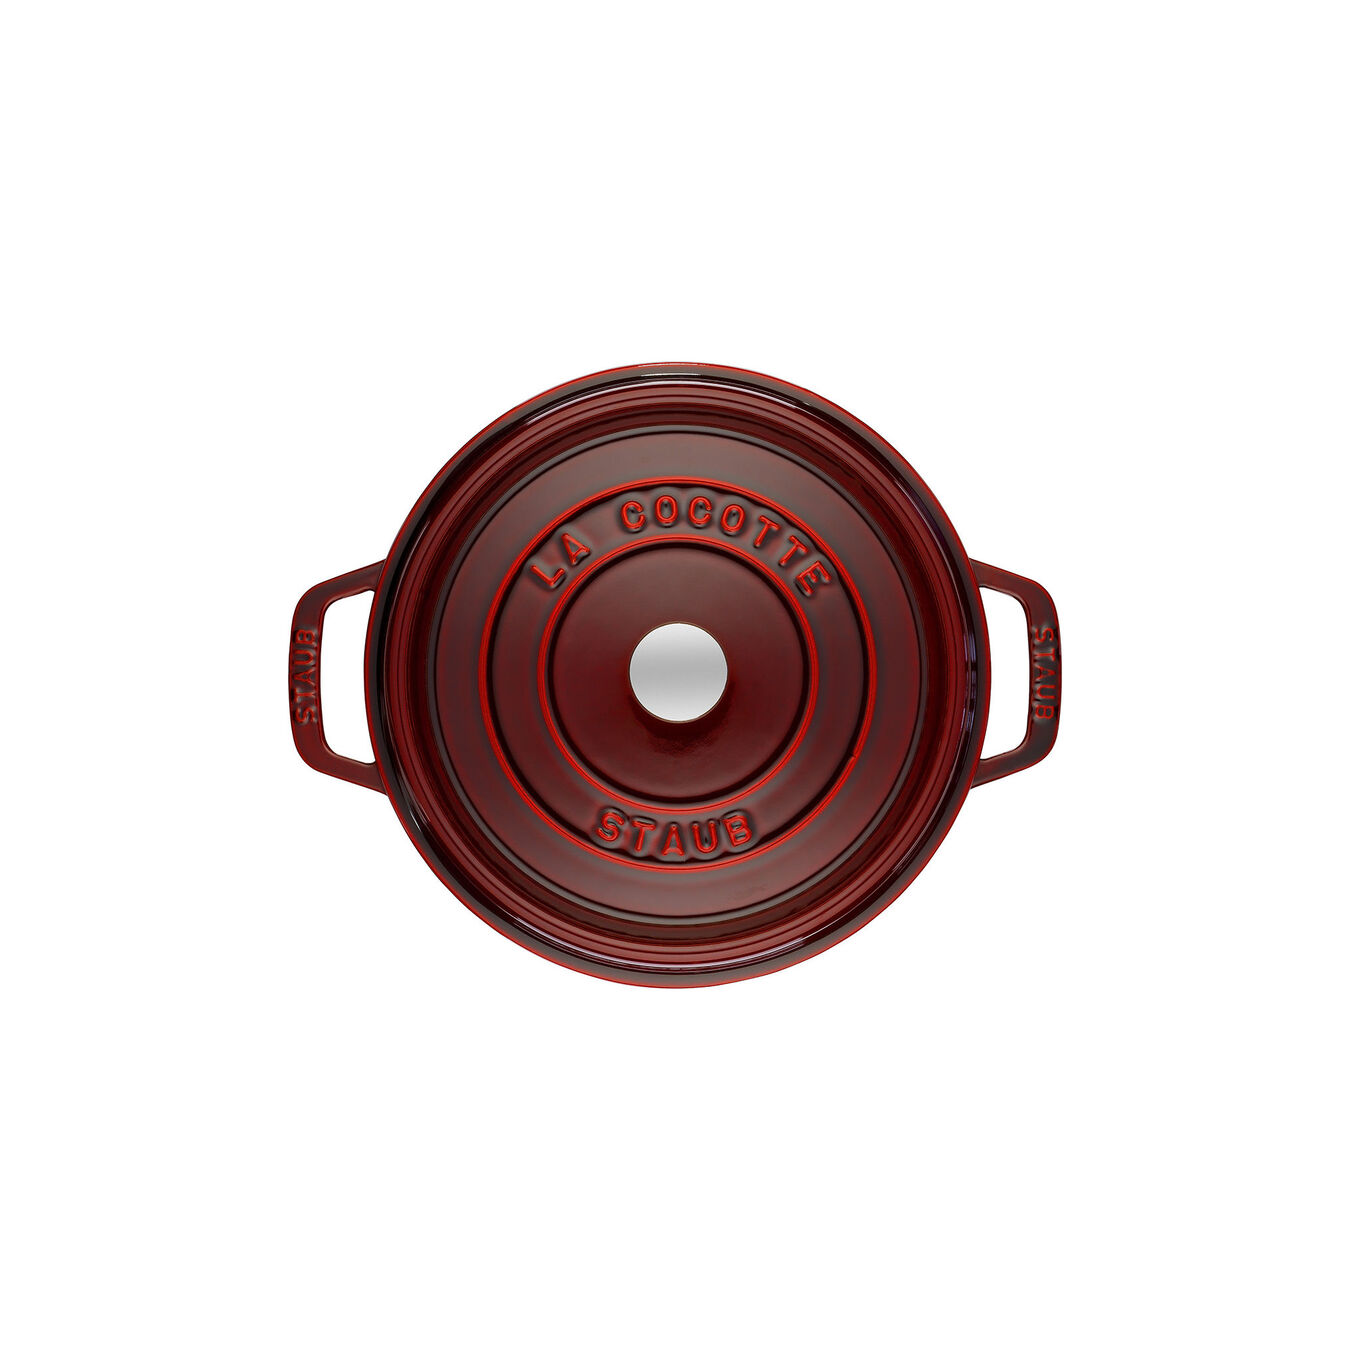 26 cm round Cast iron Cocotte grenadine-red,,large 3